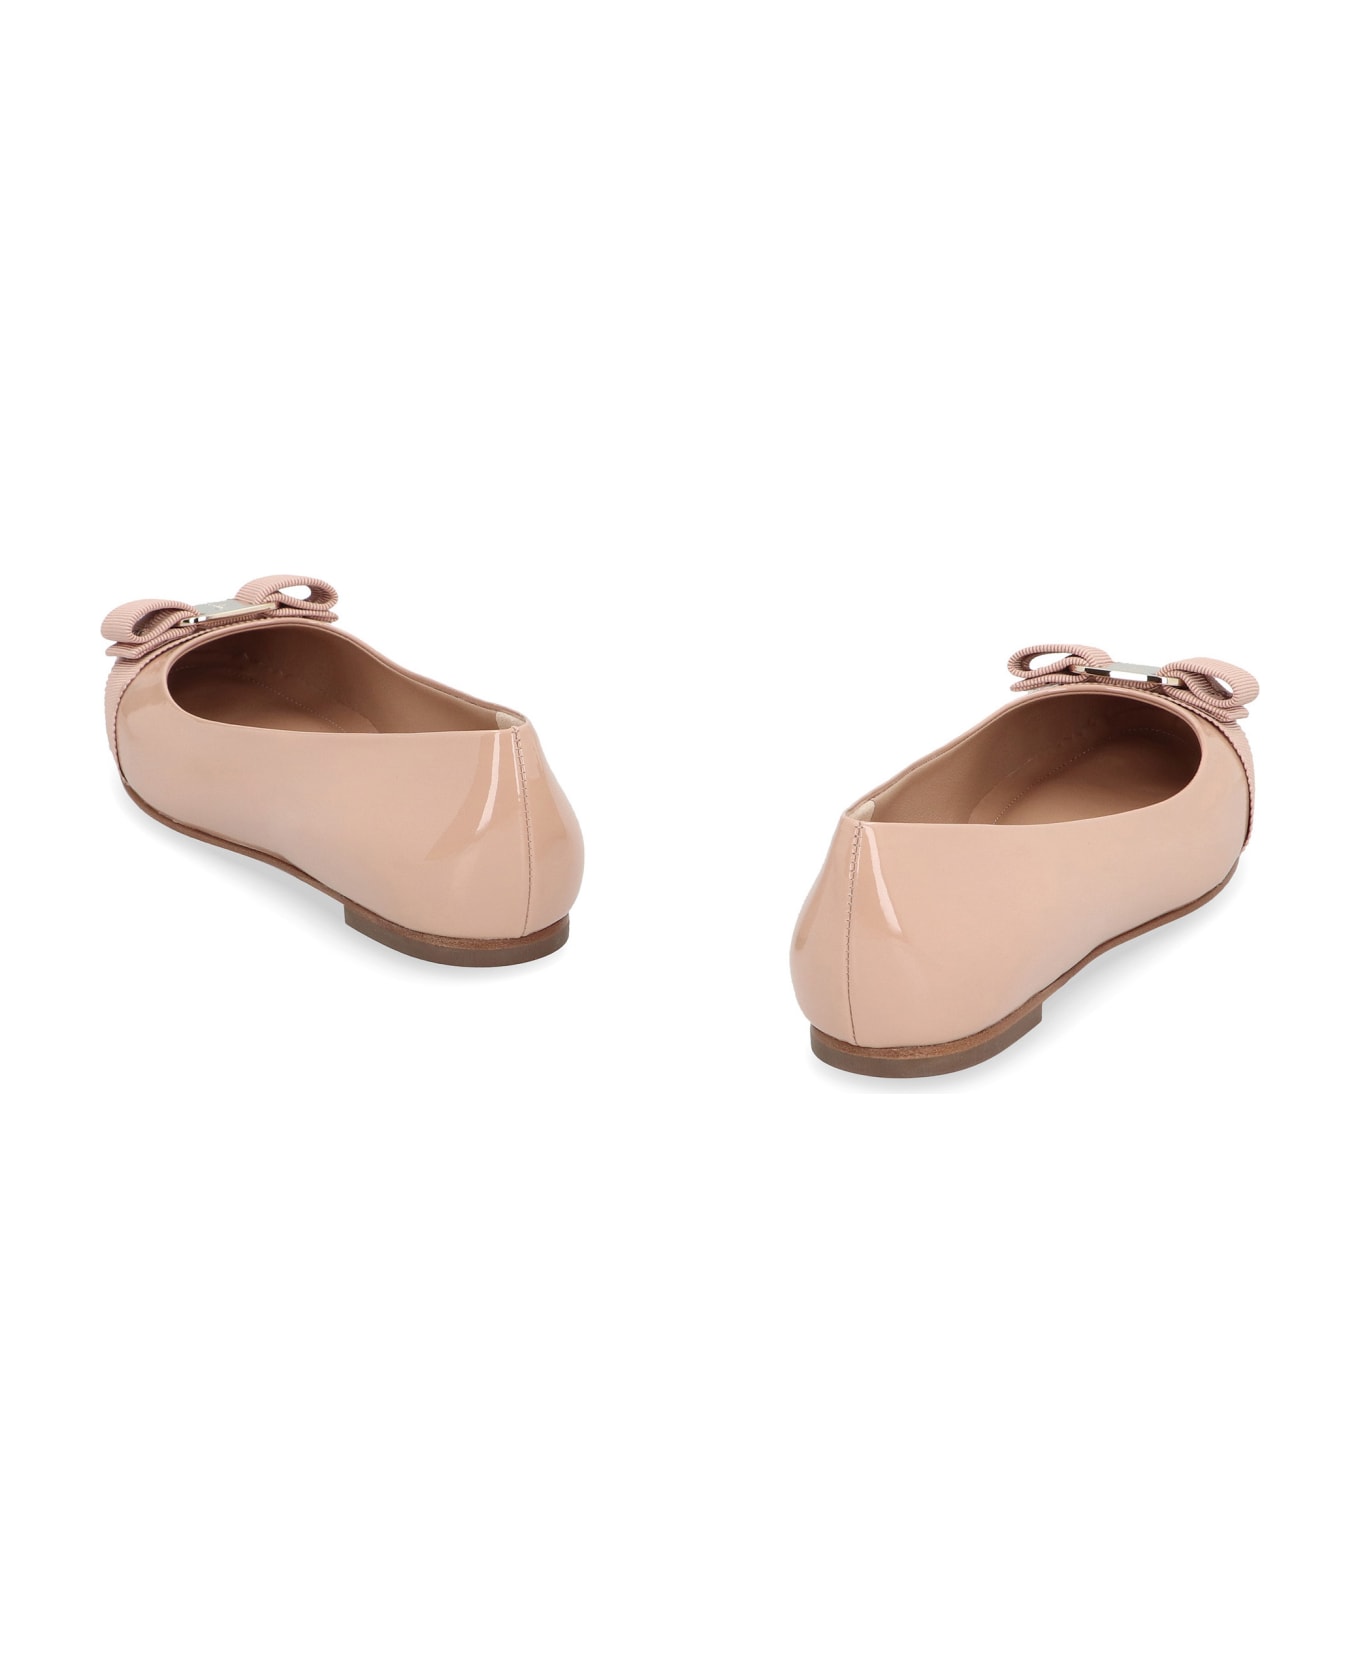 Ferragamo Varina Patent Leather Ballet Flats - Pink